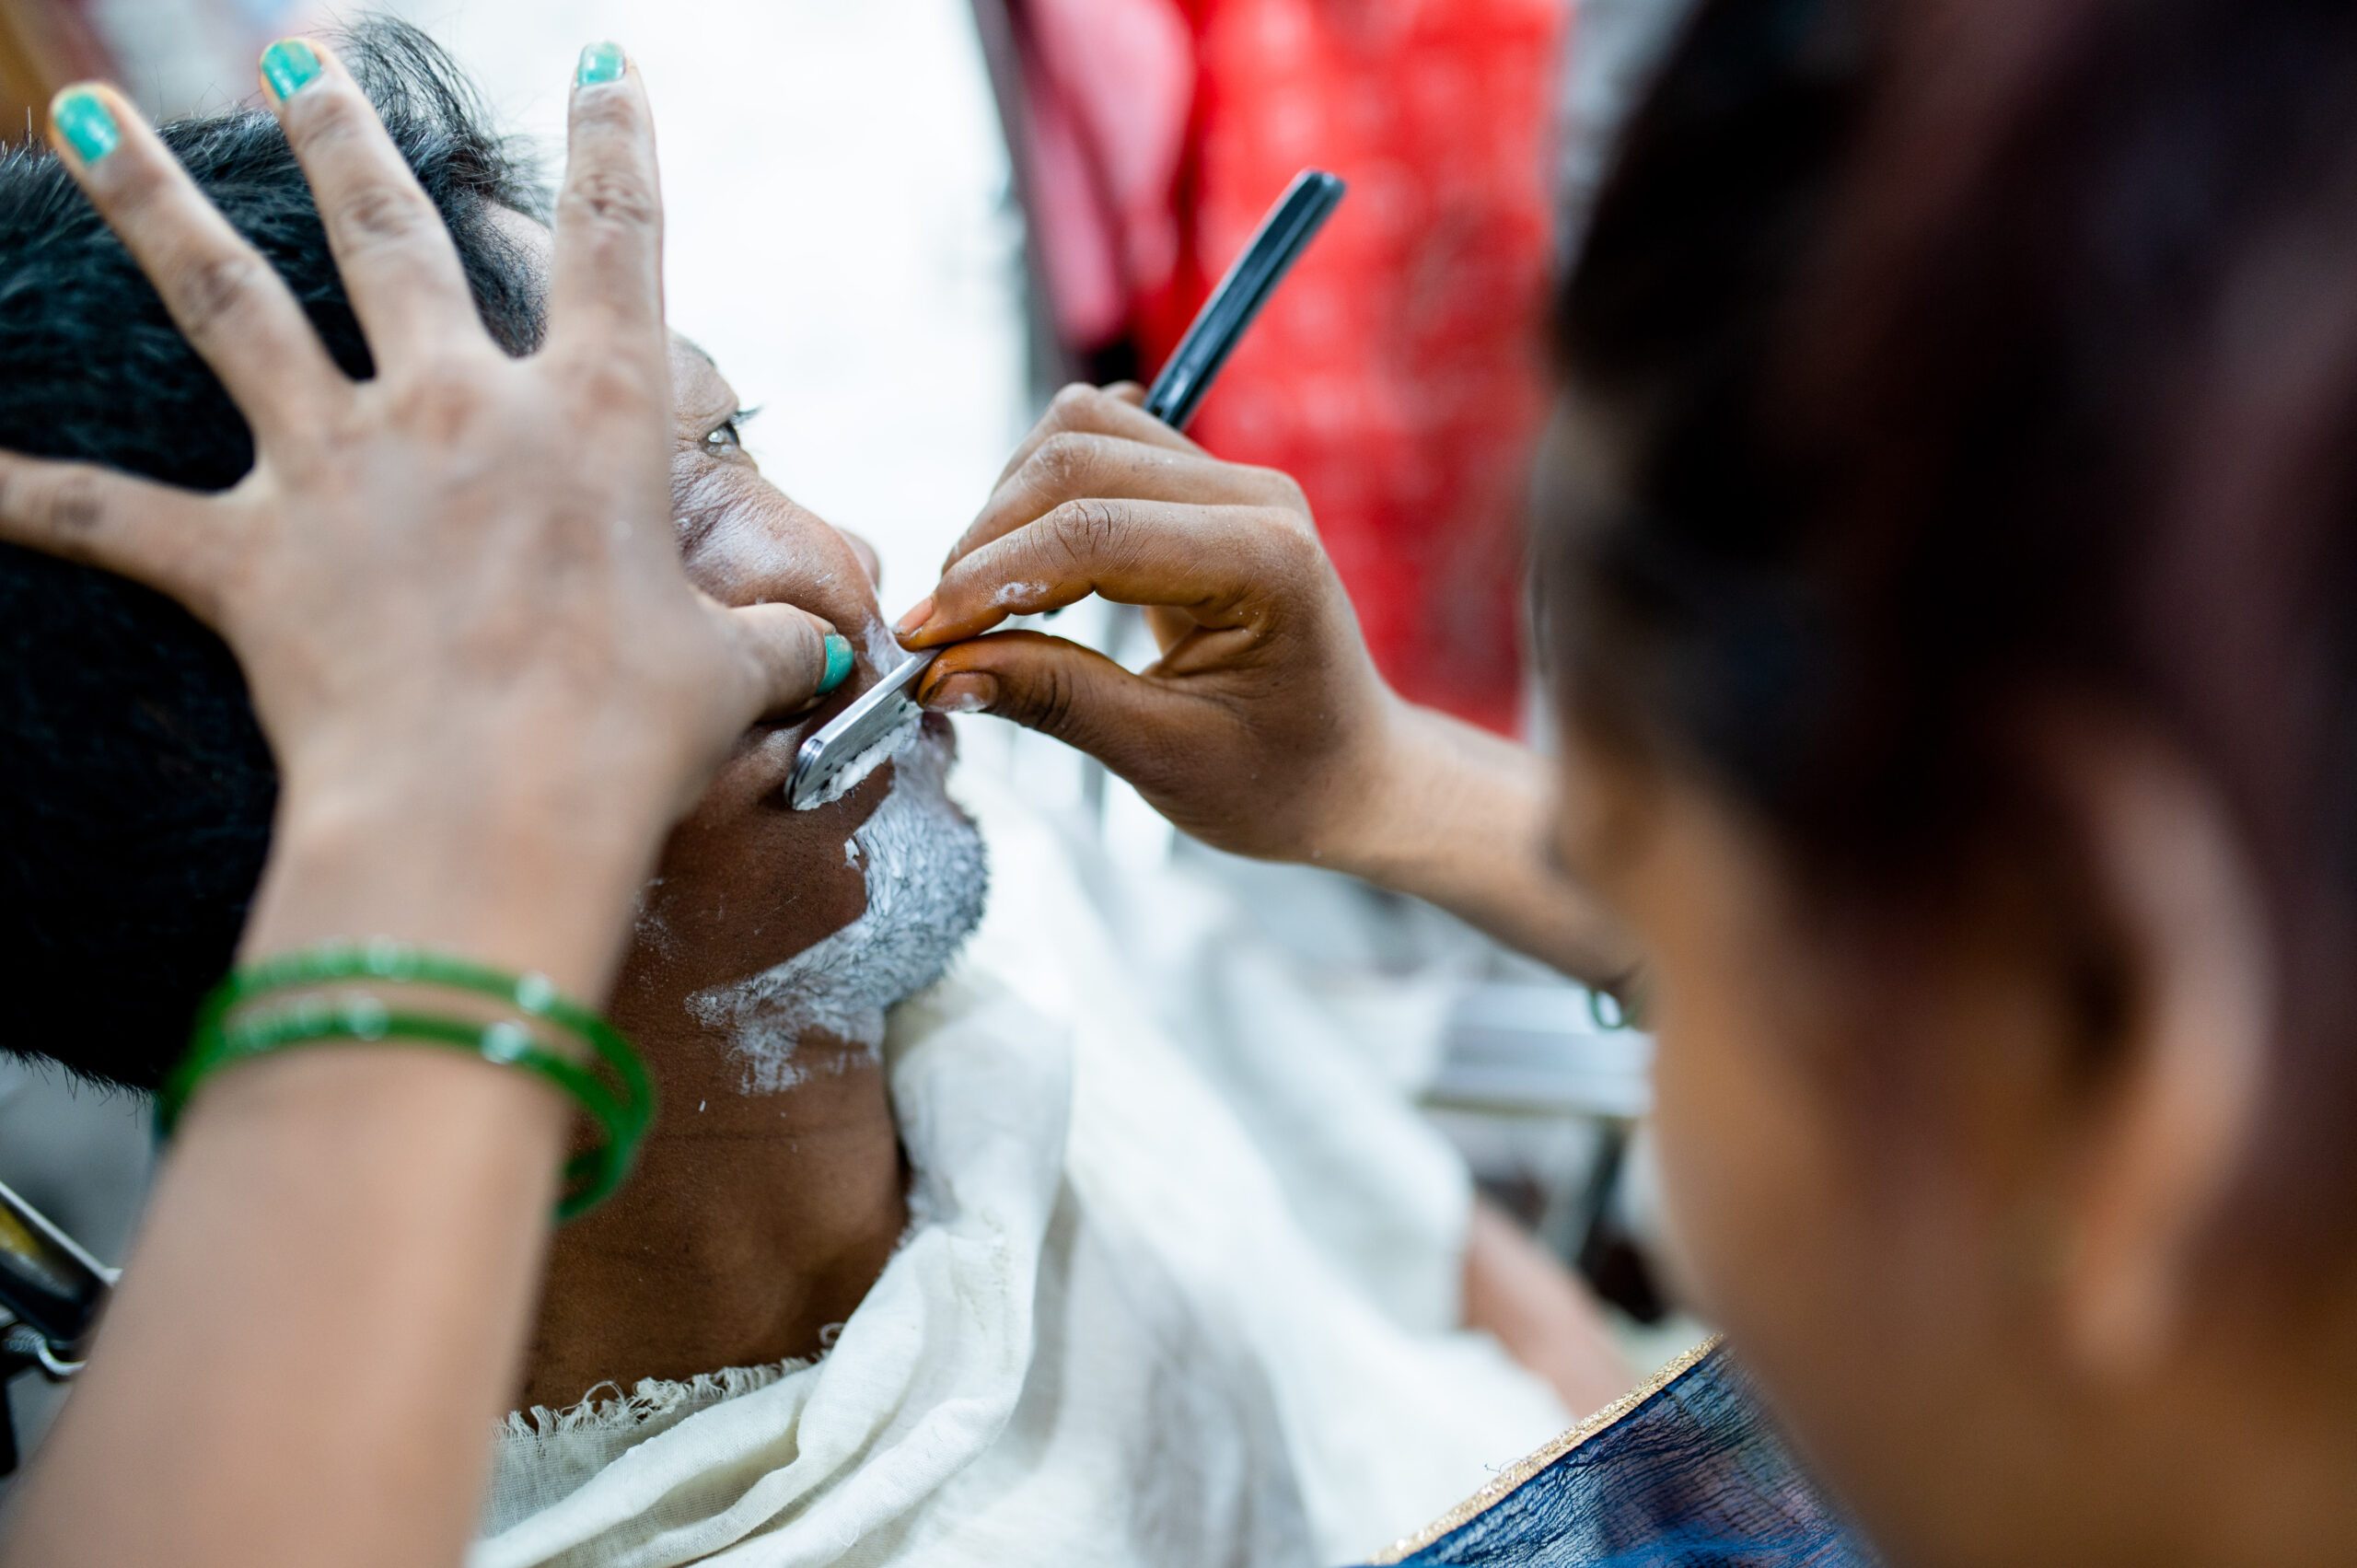 Rampati shaving a customer.